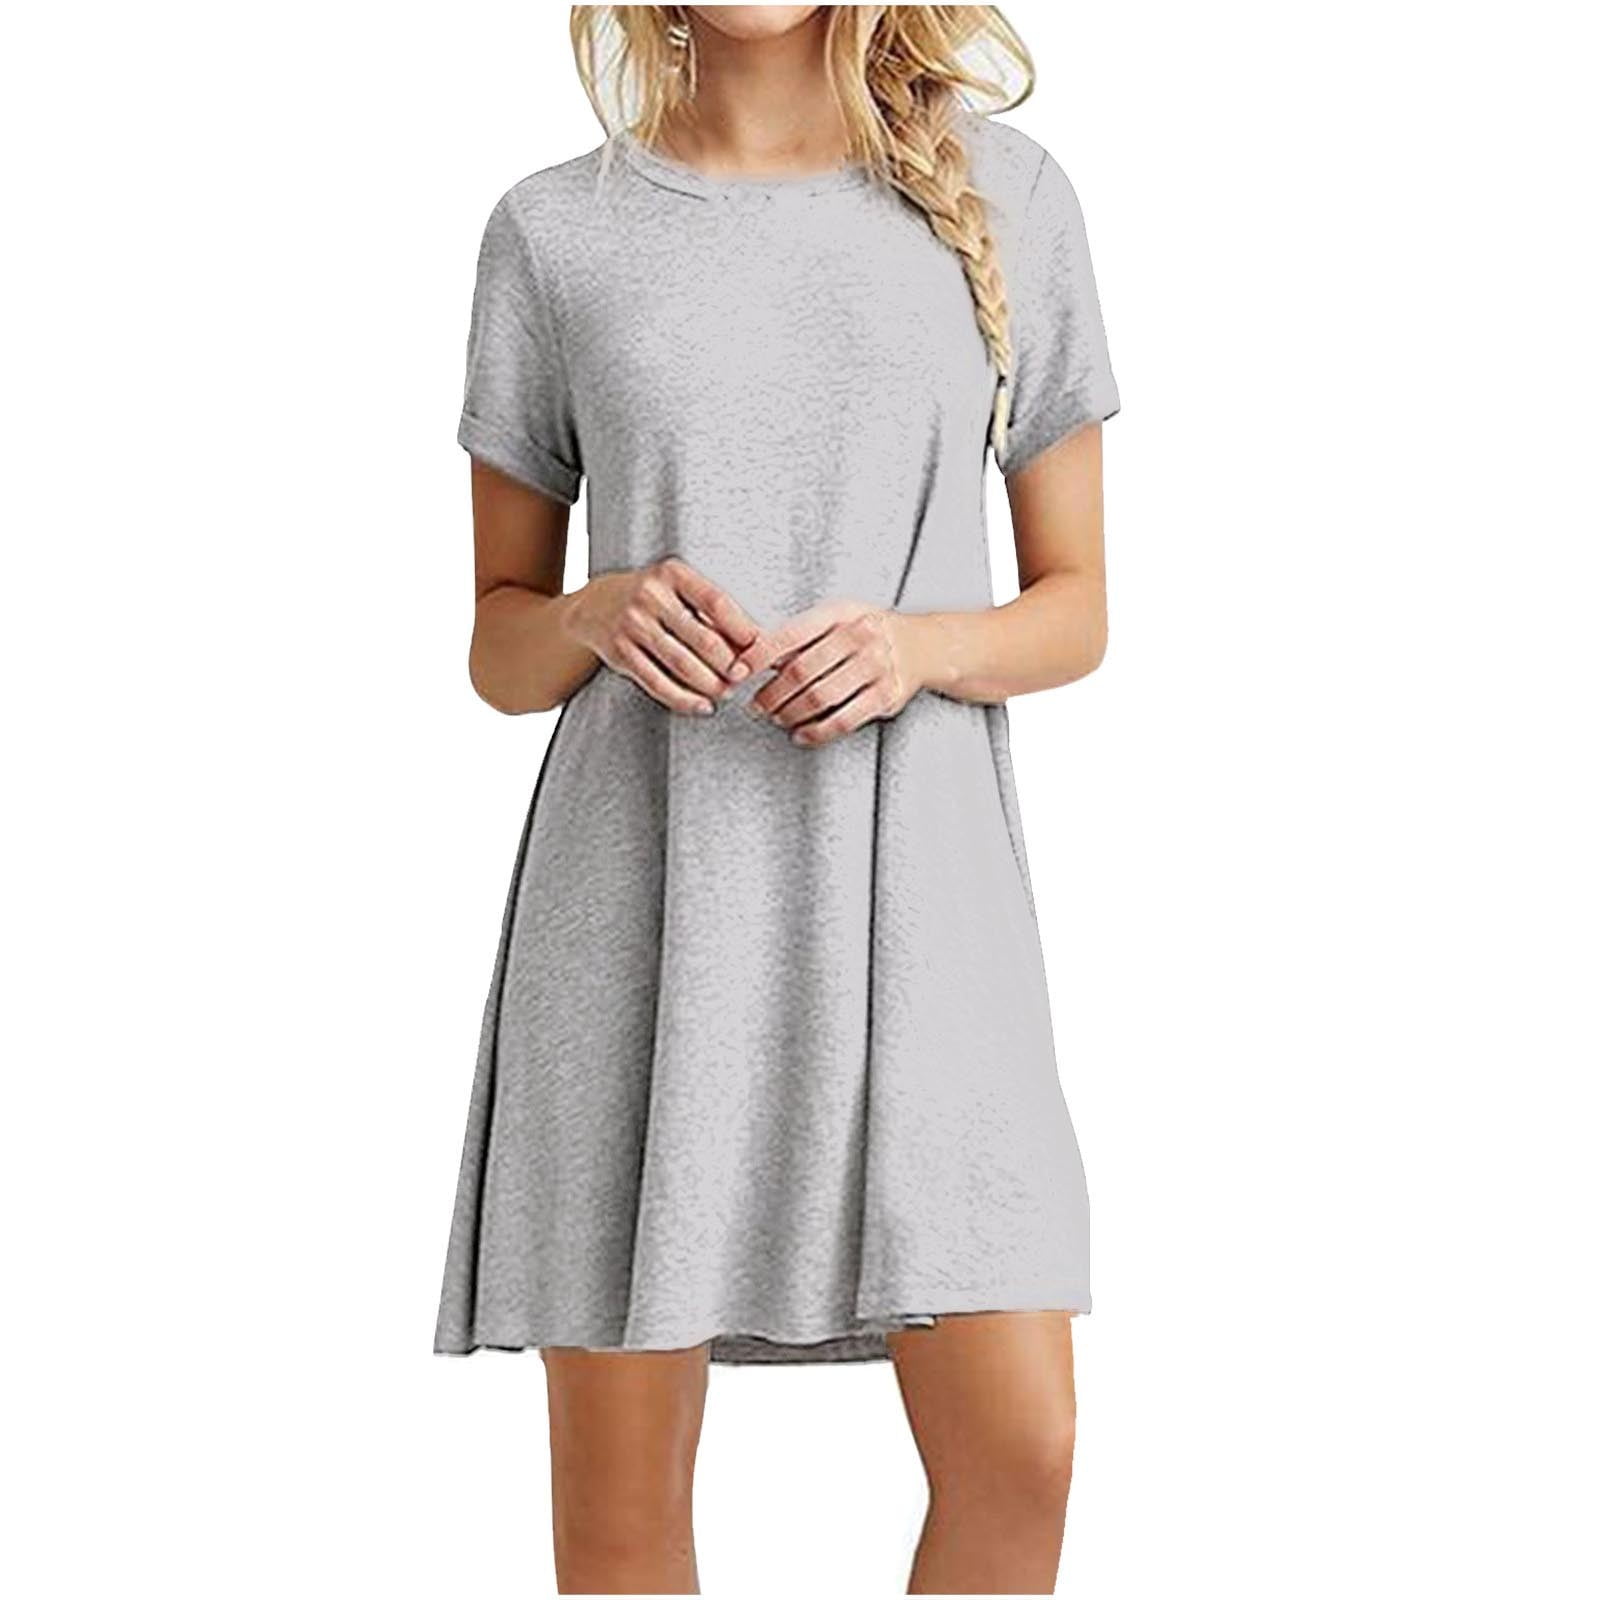 Fashion Women Casual Short Sleeve Solid Dresses Ladies Loose Mini Dress ...